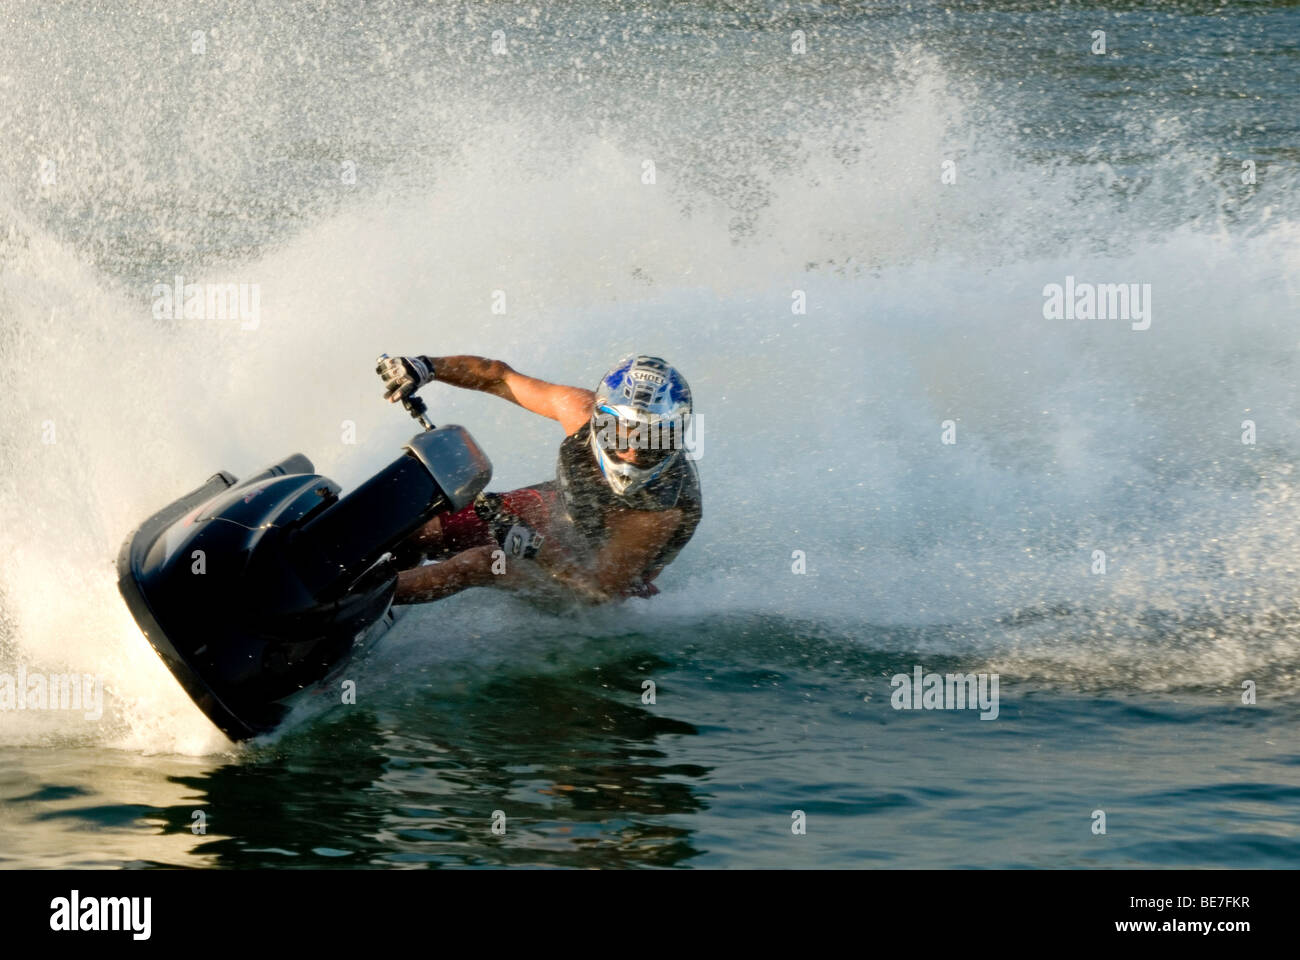 Jet ski racer taking a narrow corner Stock Photo